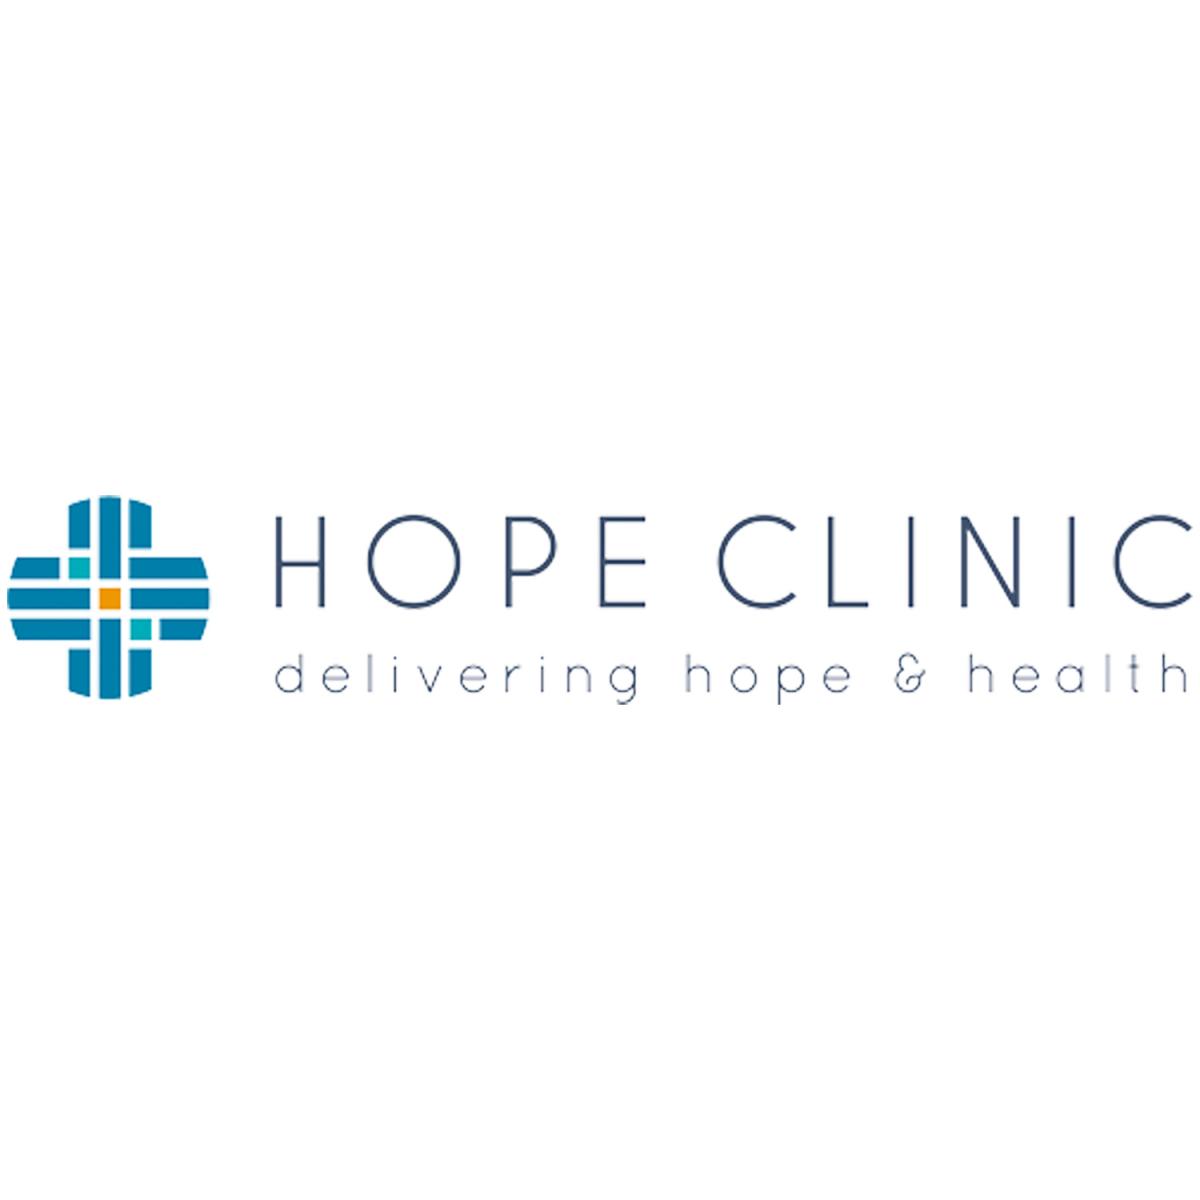 The Hope Clinic of McKinney